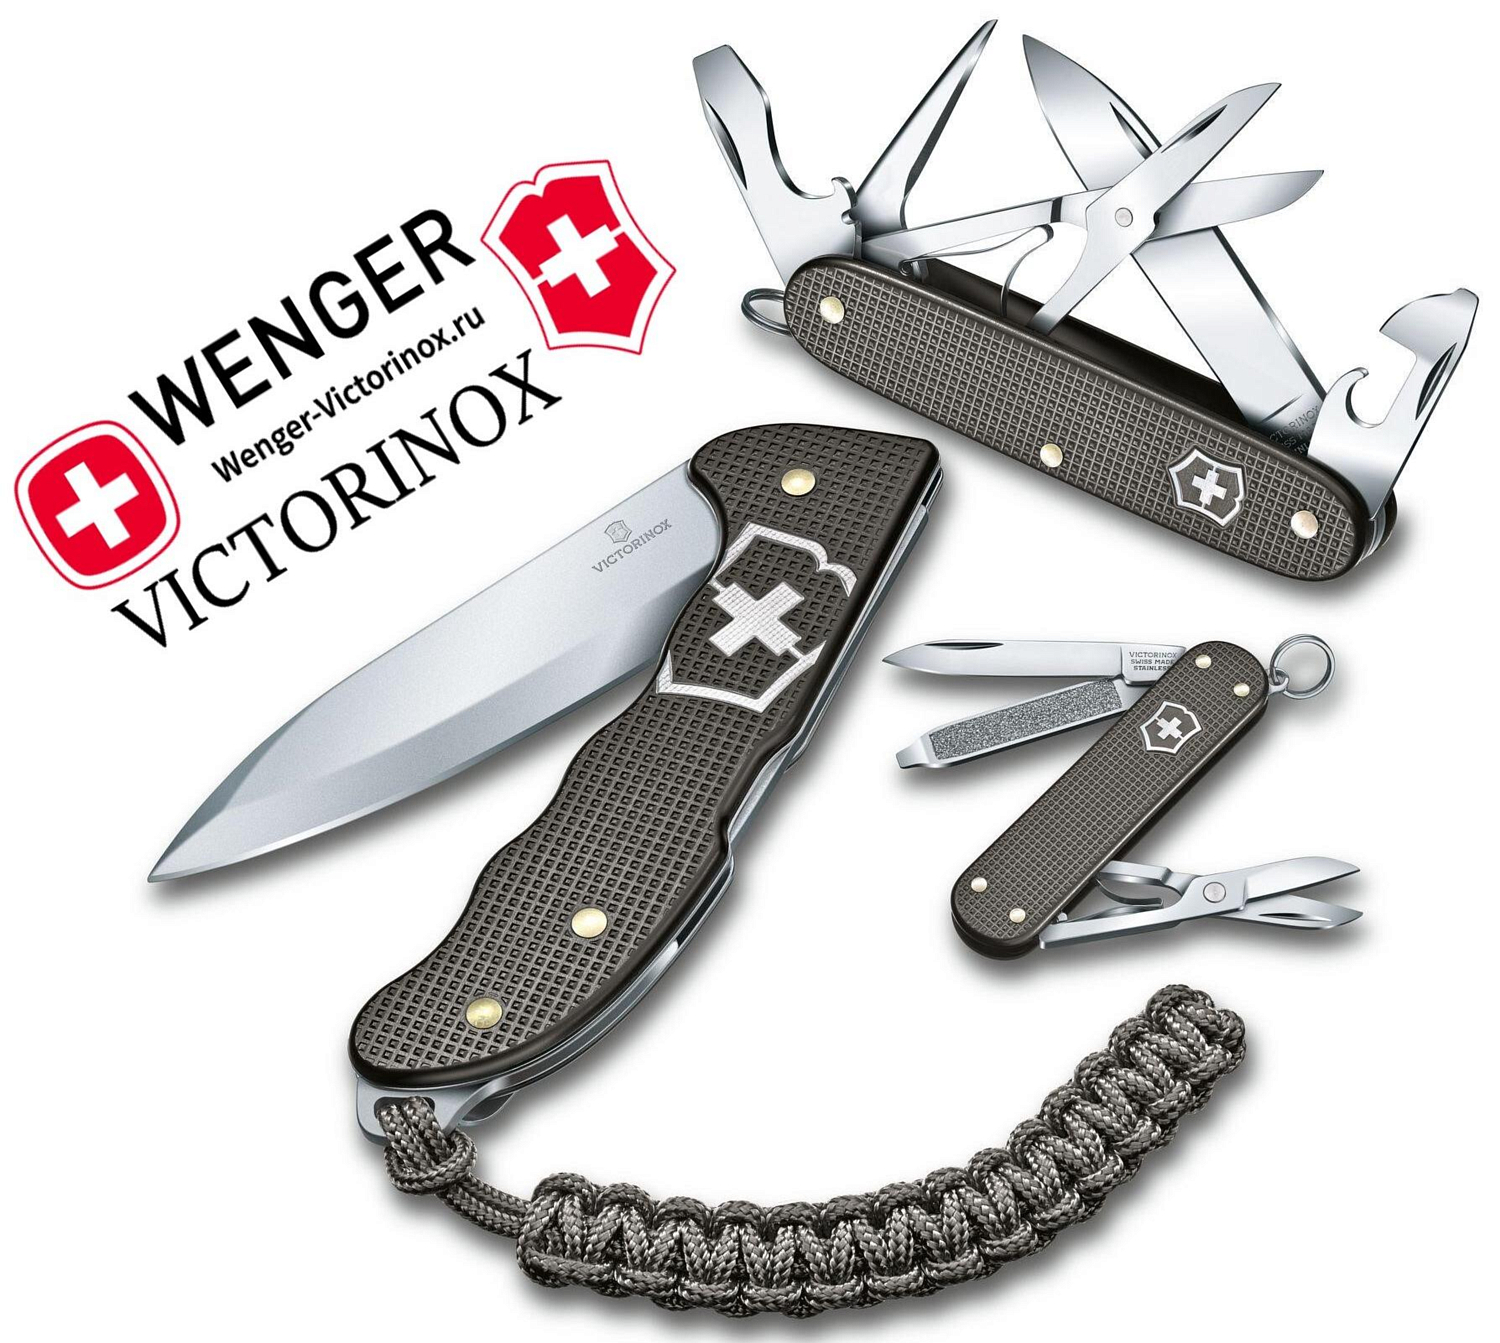 Нож Victorinox охотничий Hunter Pro Alox LE 2022 130 мм, 4 функции, с фиксатором лезвия серый